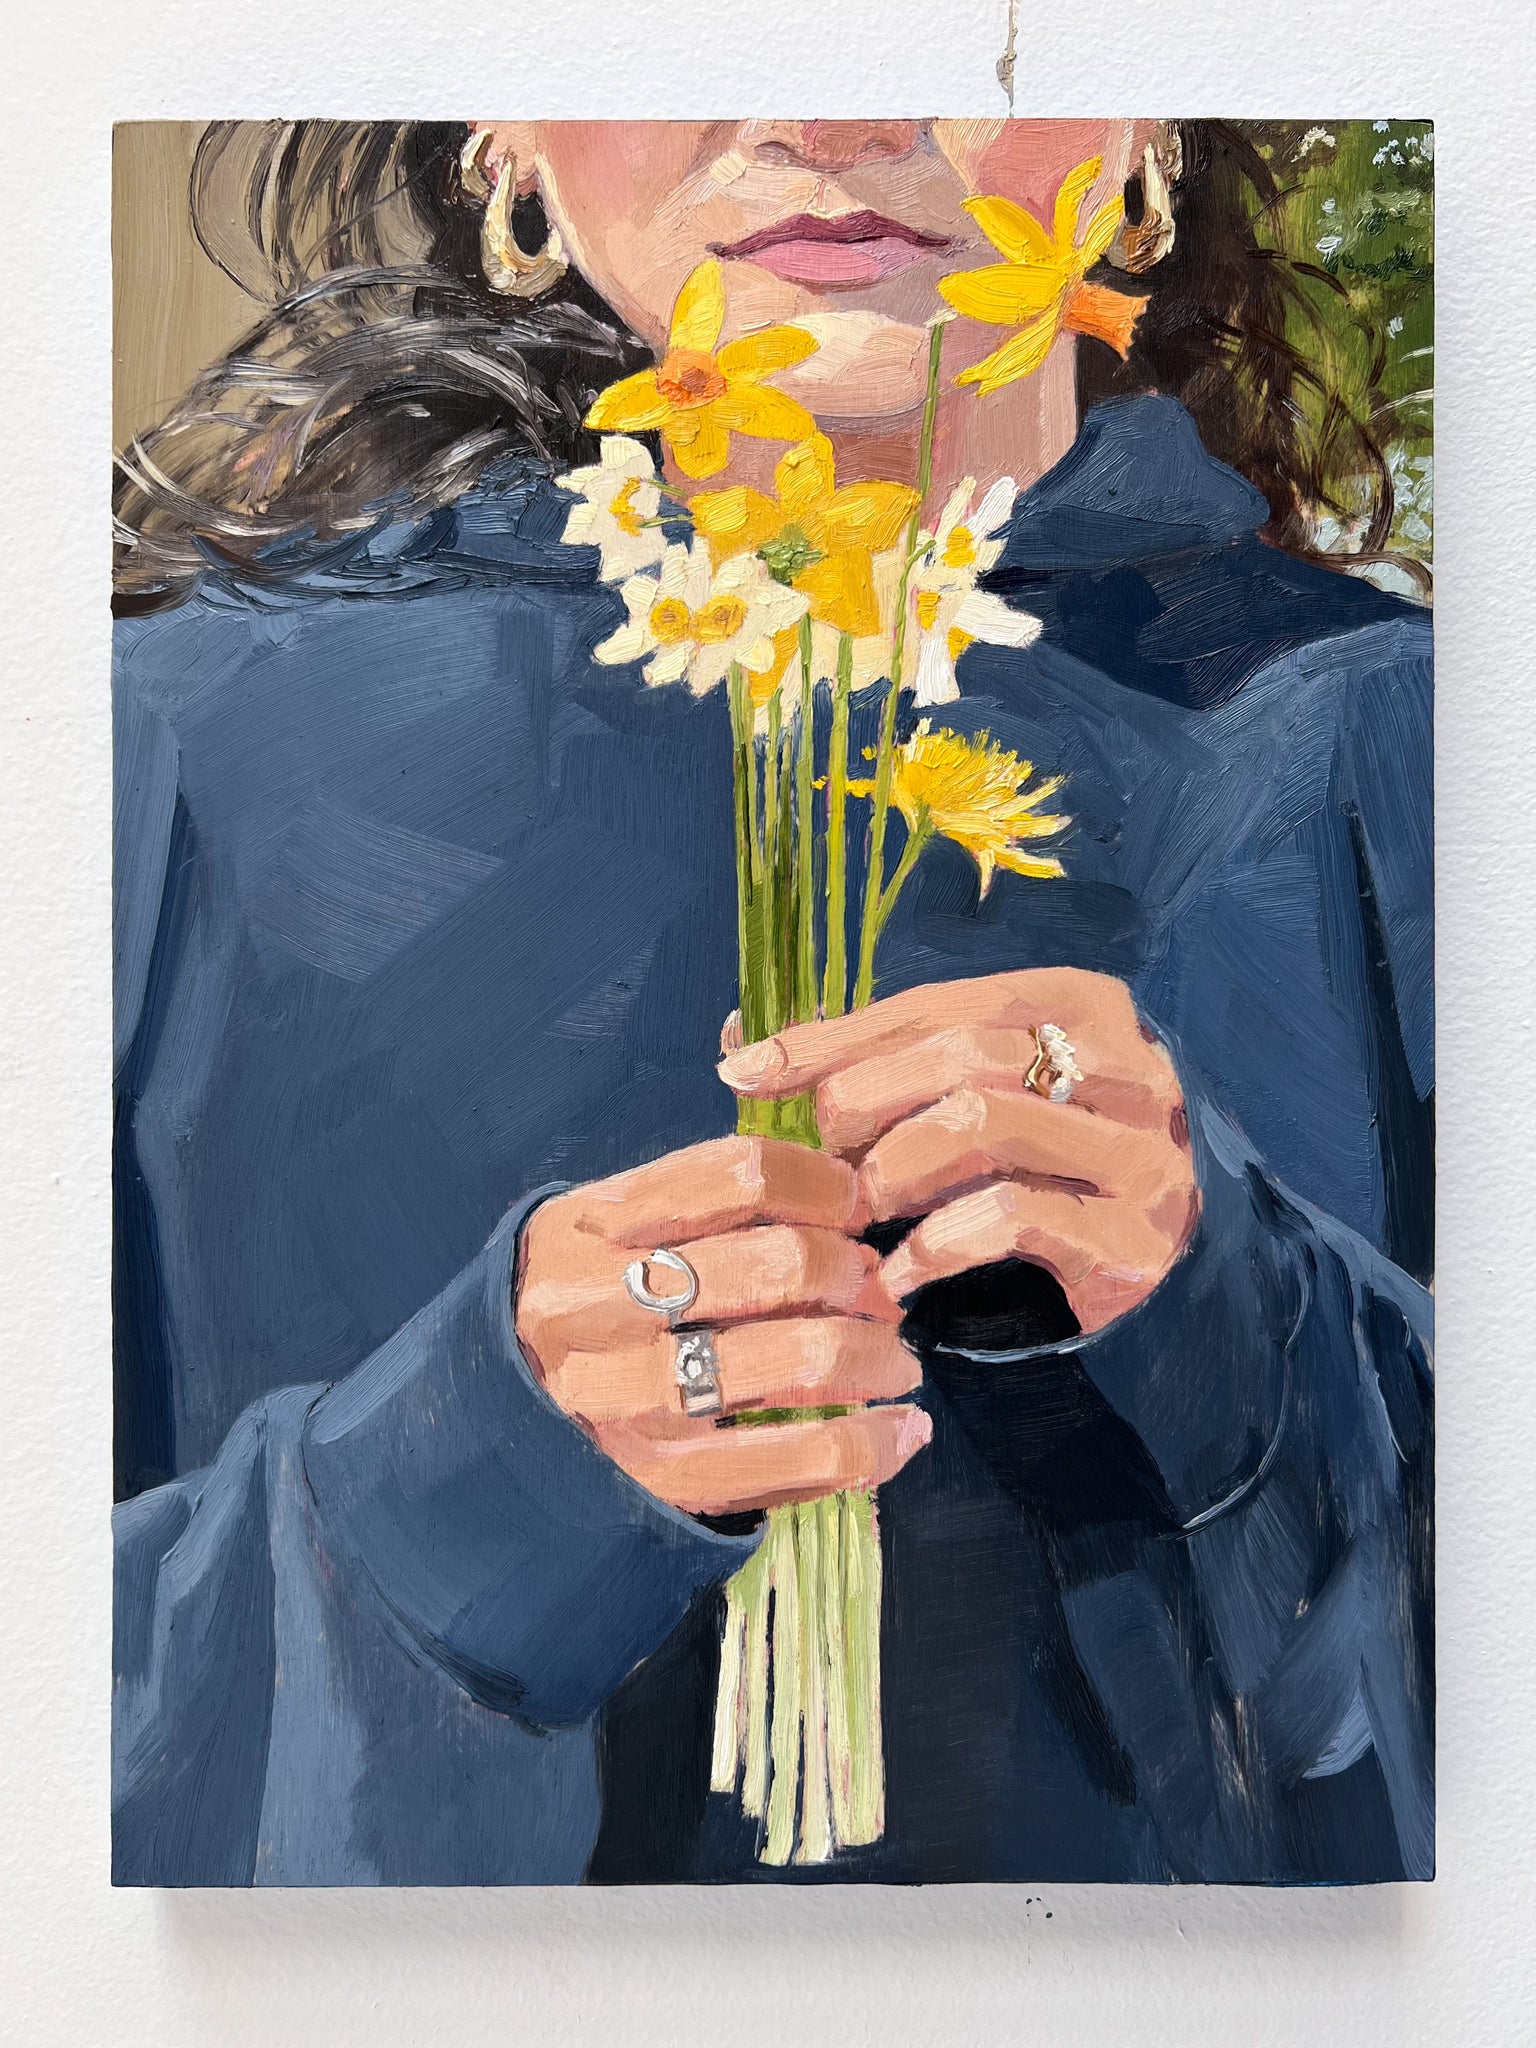 Daffodils in Hand